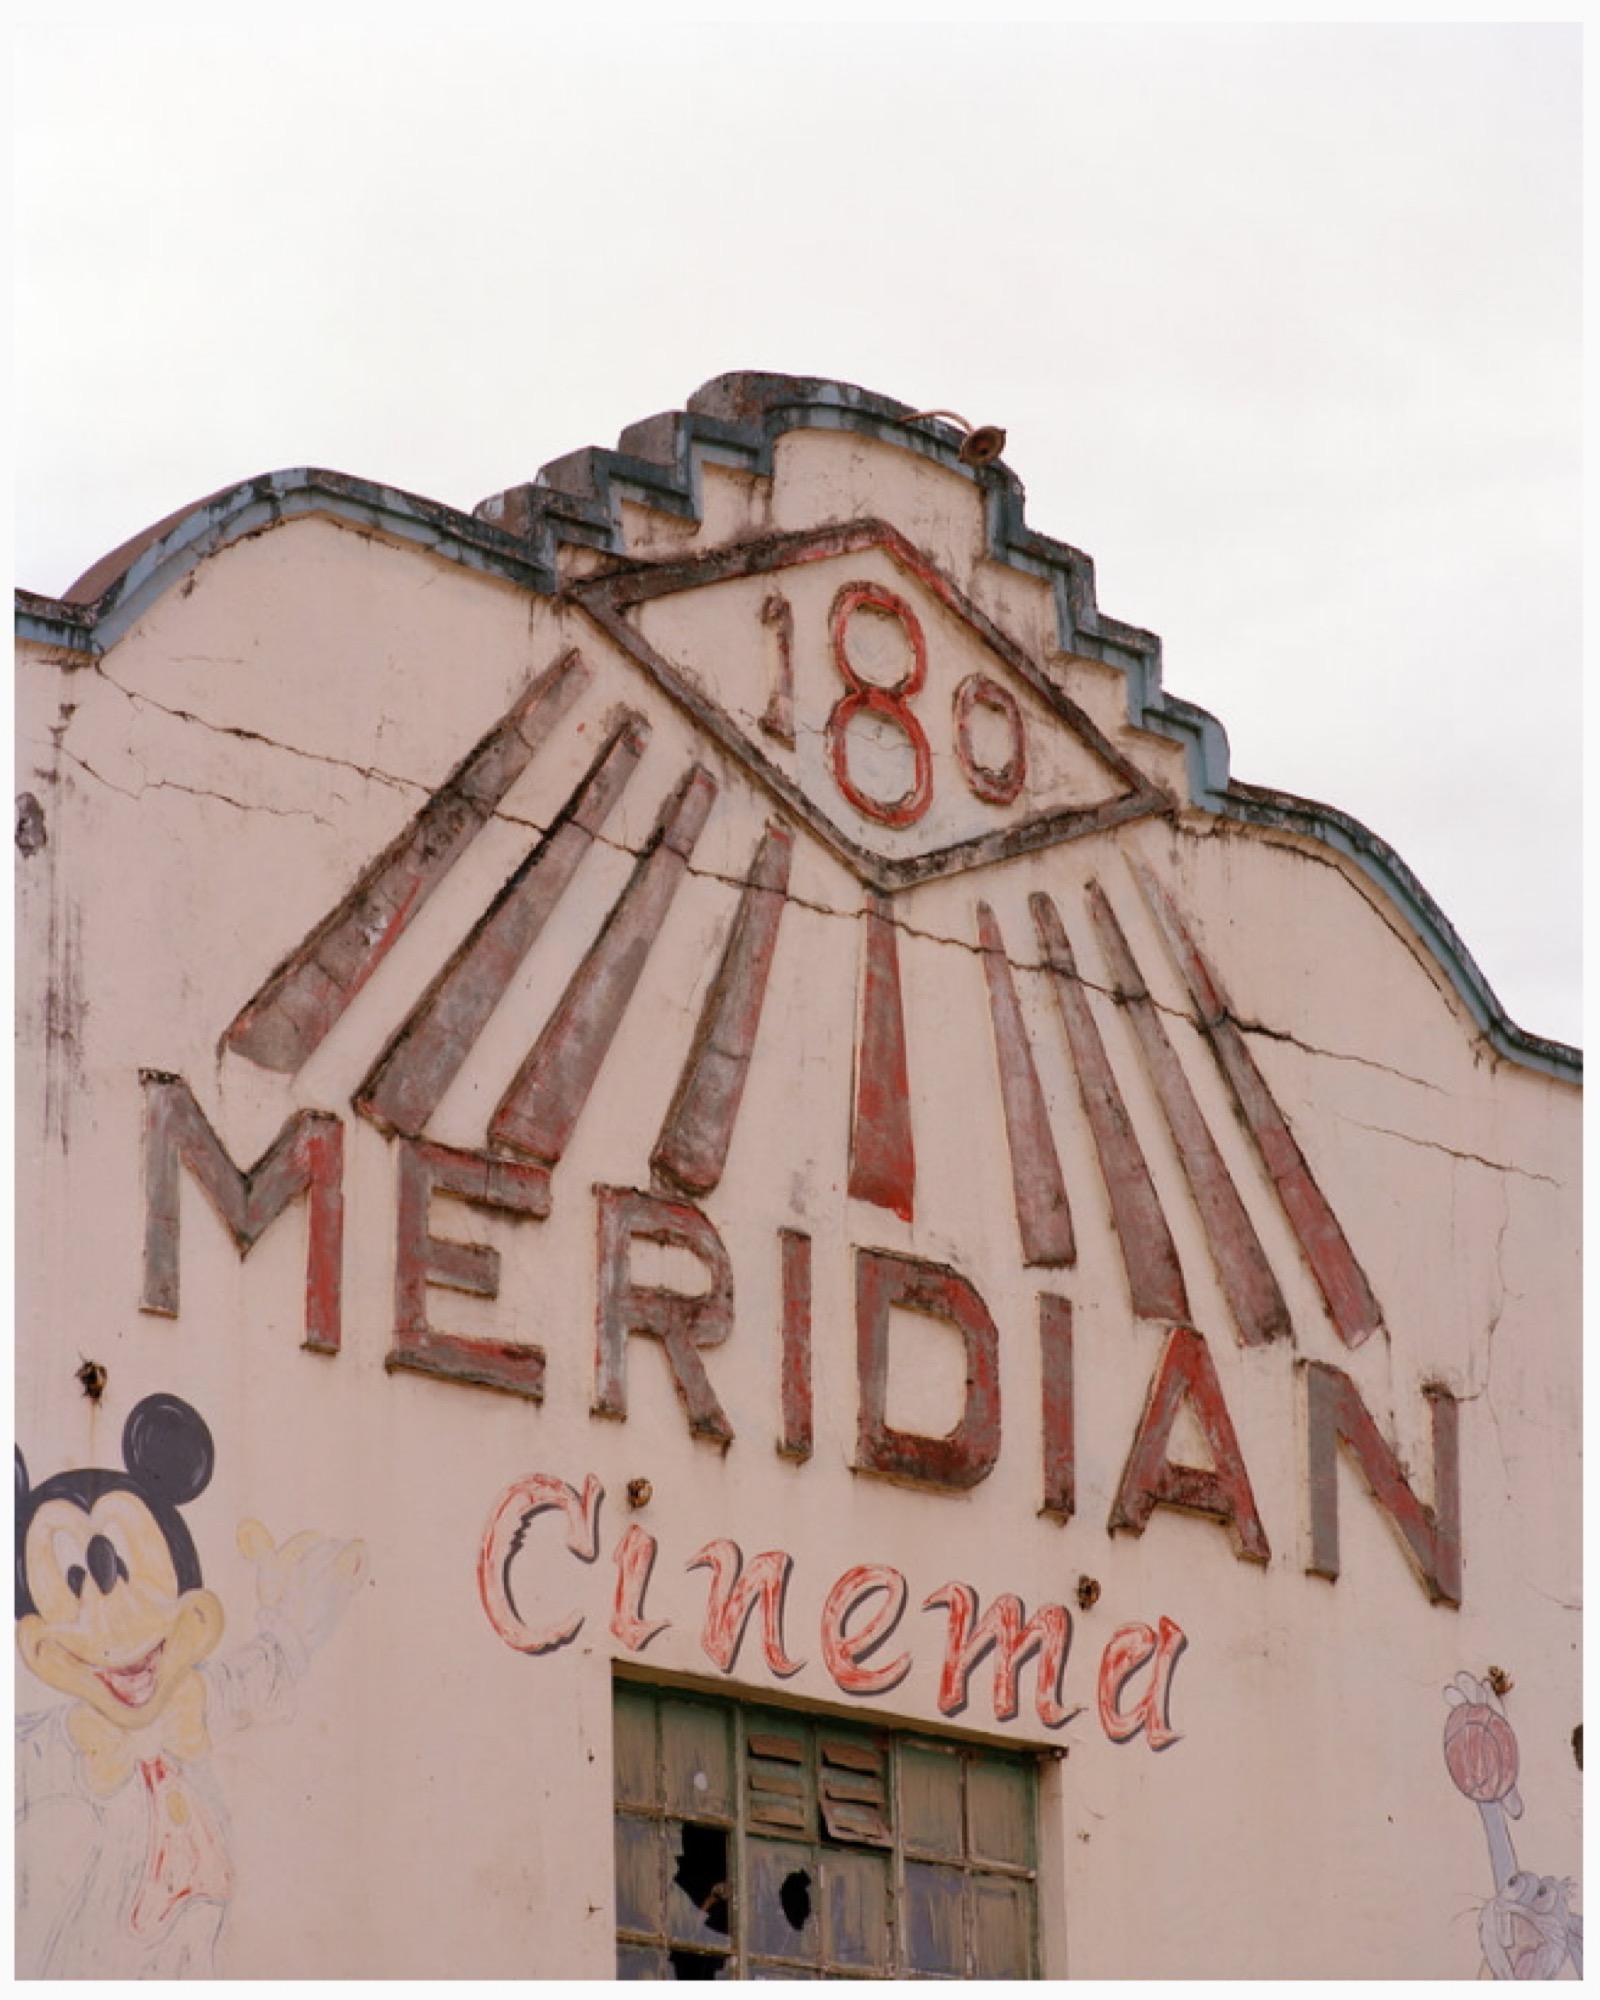 Douglas Lance Gibson, <em>Meridian Cinema I</em>, 2014.<br />
Archival pigment print, coconut timber frame, 70 x 56 cm.